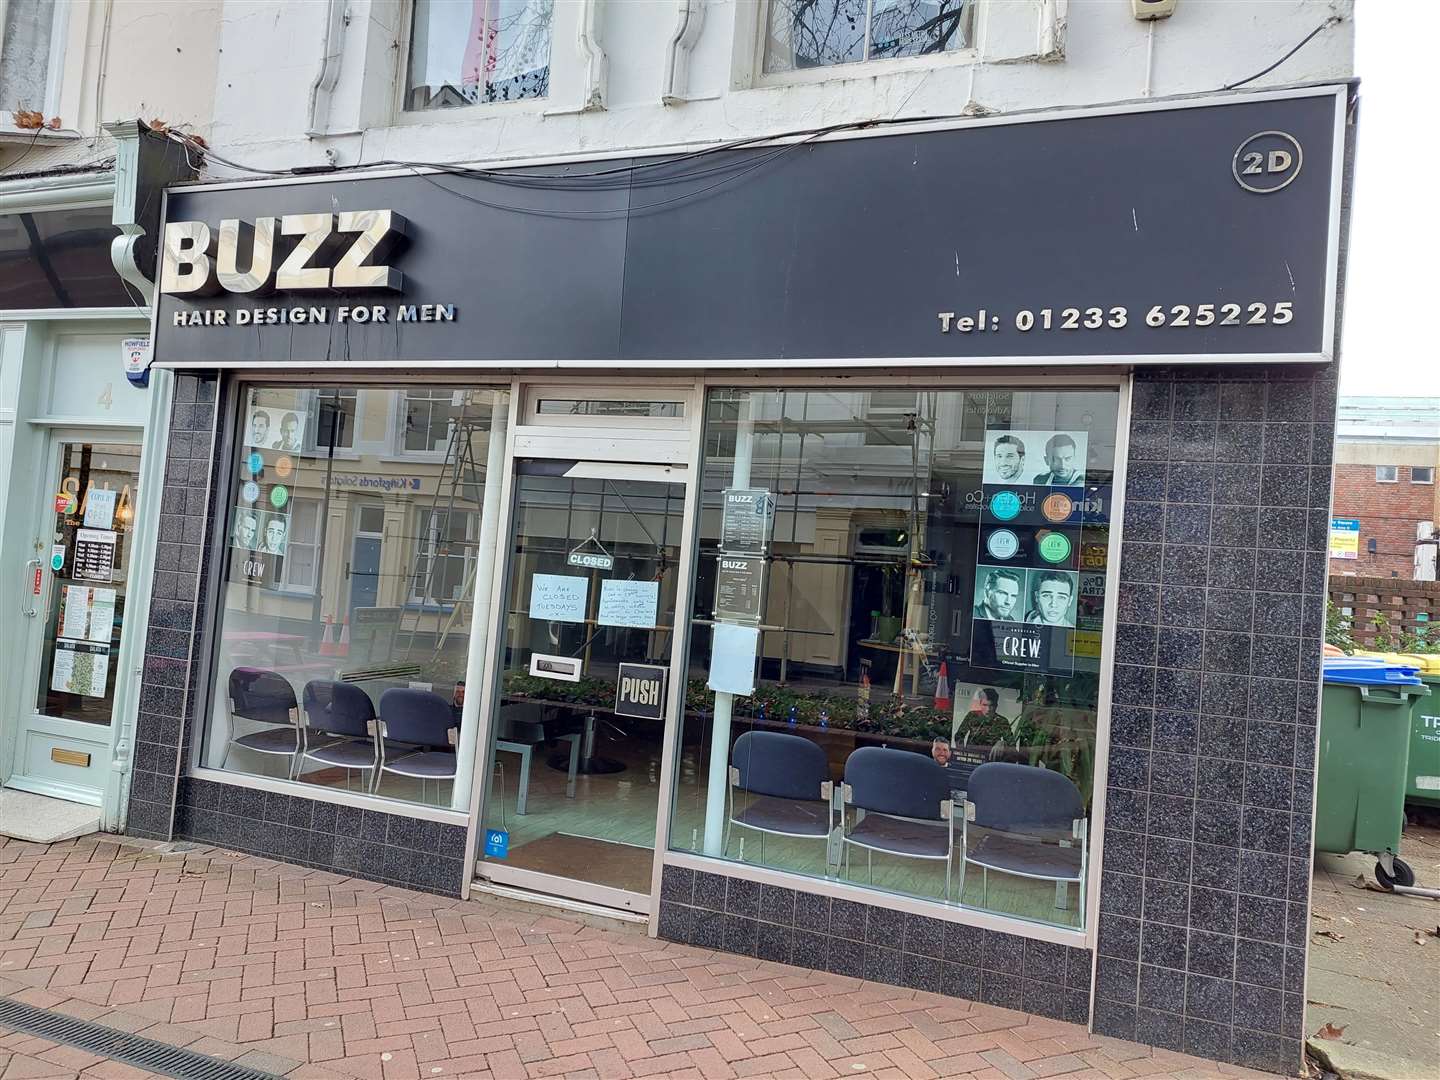 Buzz Hair Design for Men in Ashford is closing